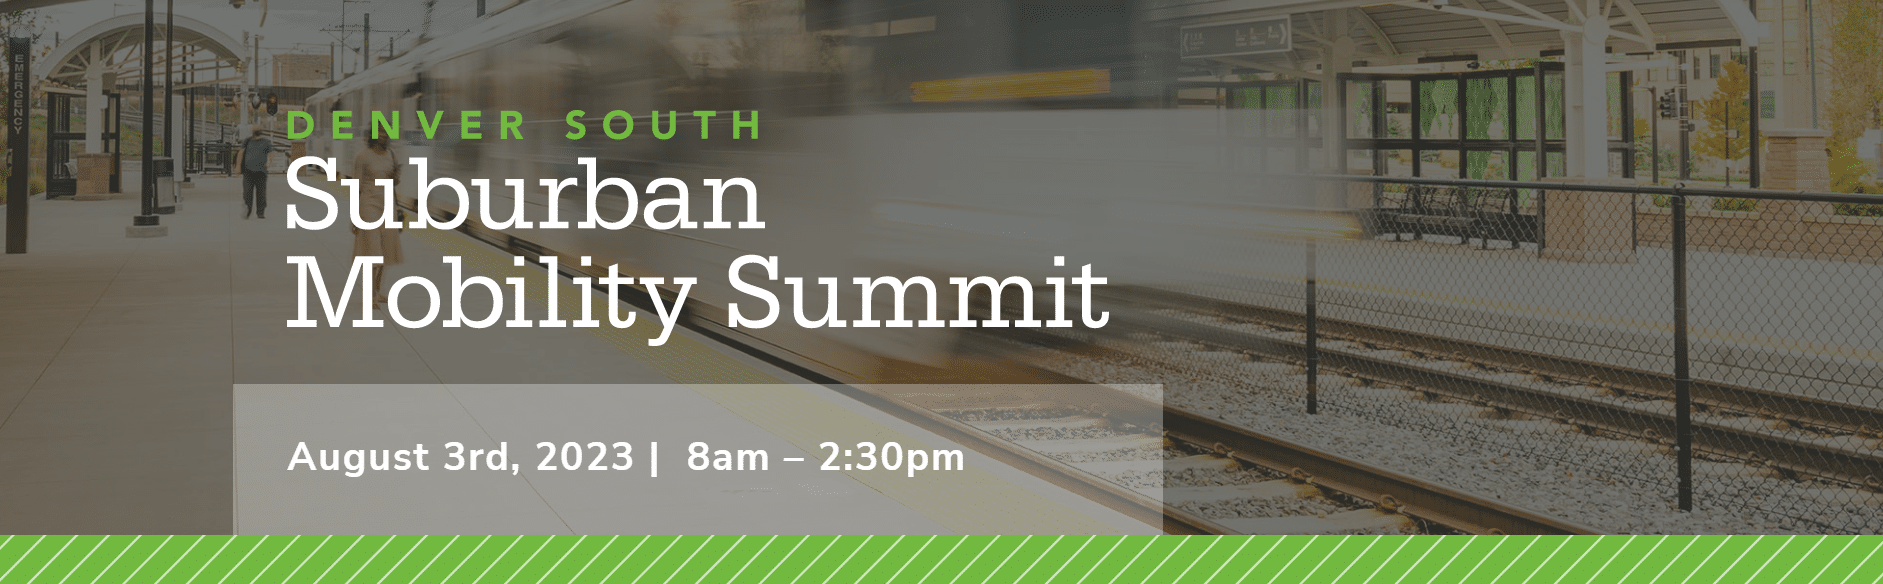 Suburban Mobility Summit Header